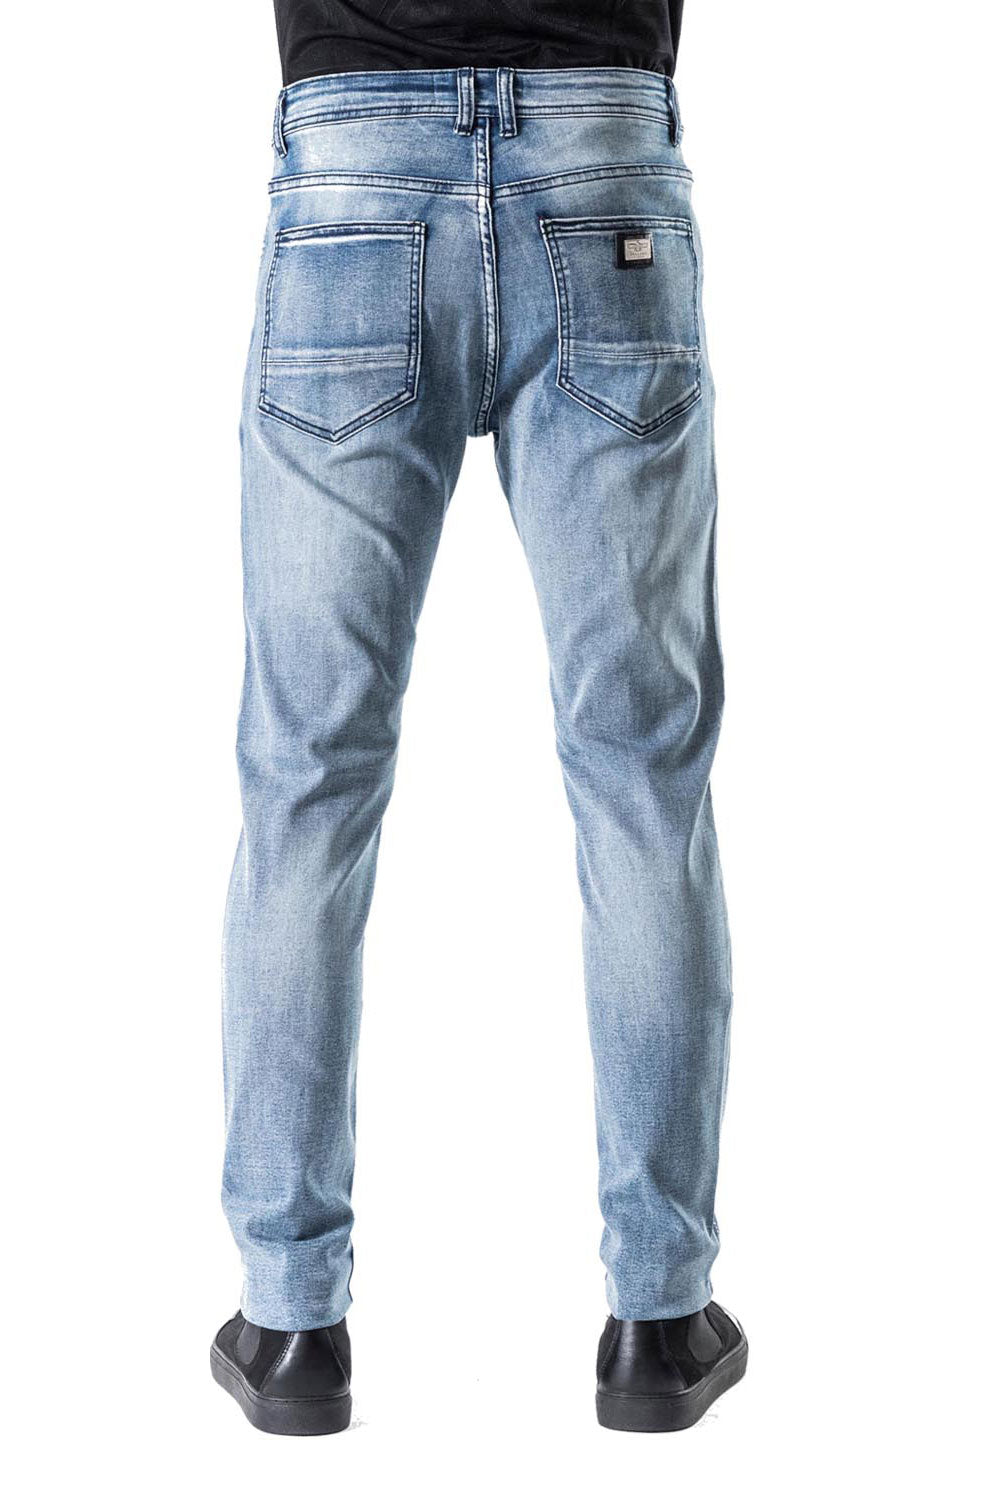 Barabas Men's Rhinestone Stretchy Slim Fit Blue Denim Jeans SN8887 Blue